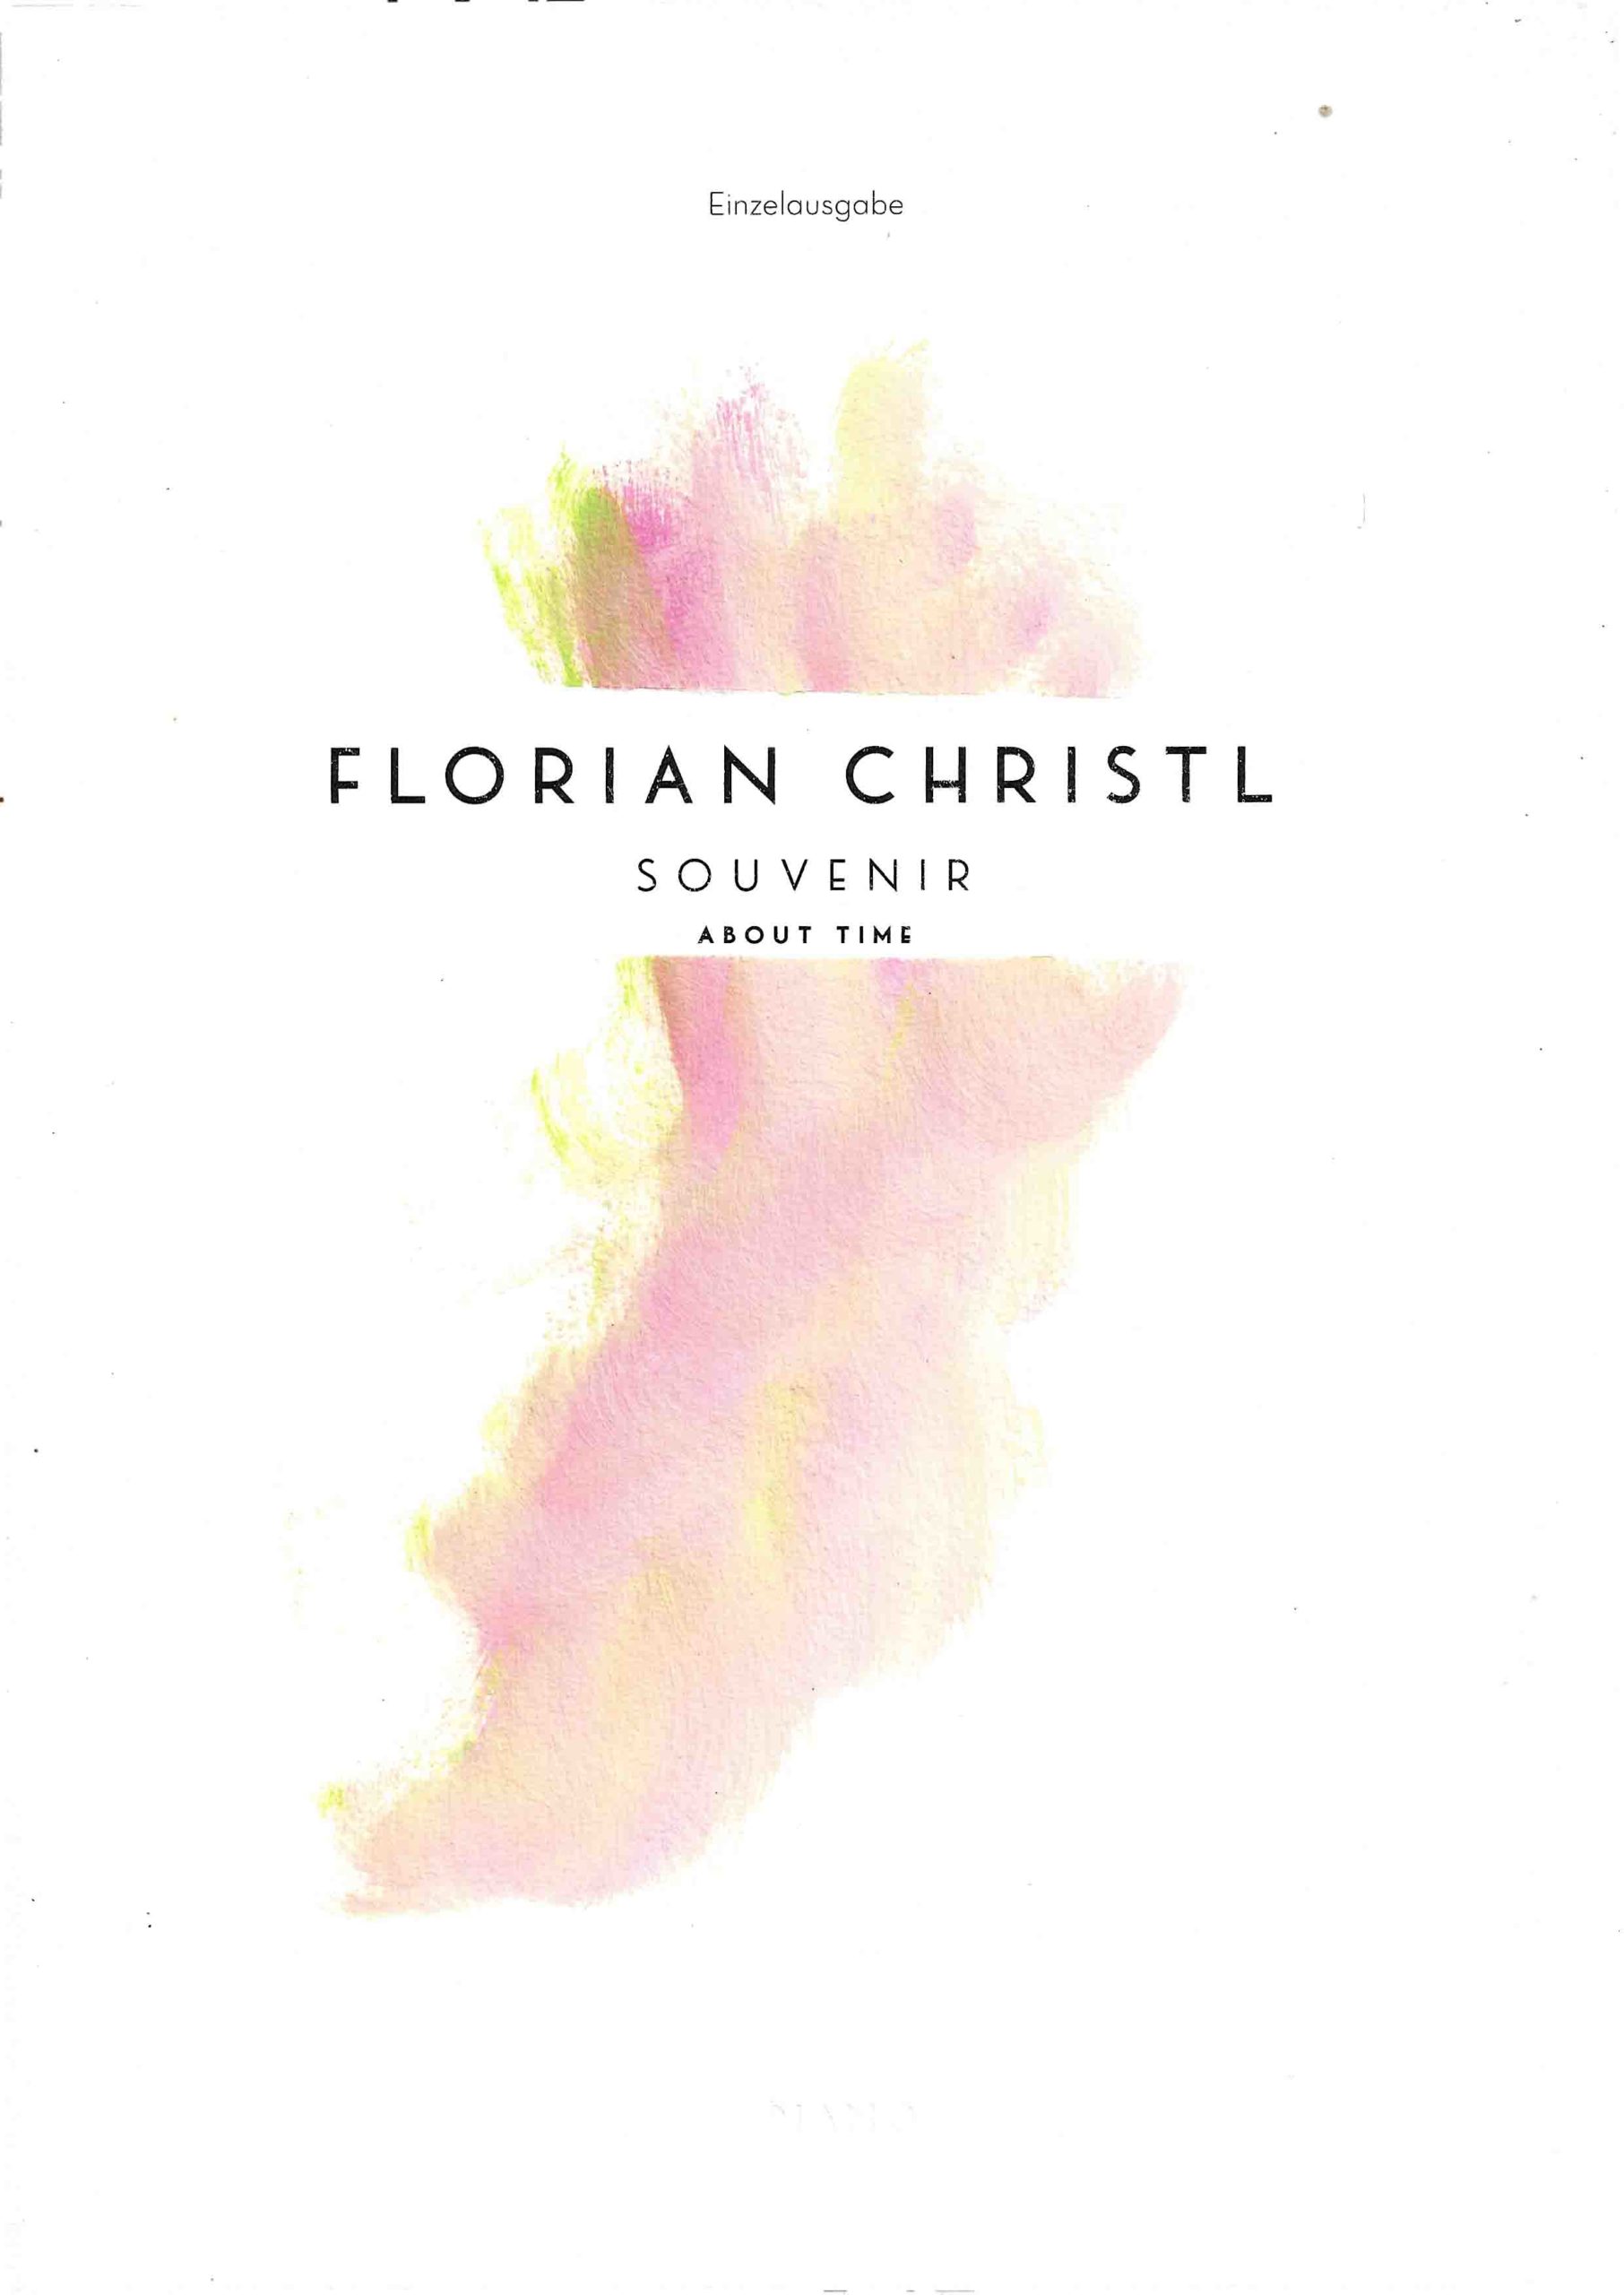 001 Souvenir_Florian_Christl_Piano_Sheet_Music